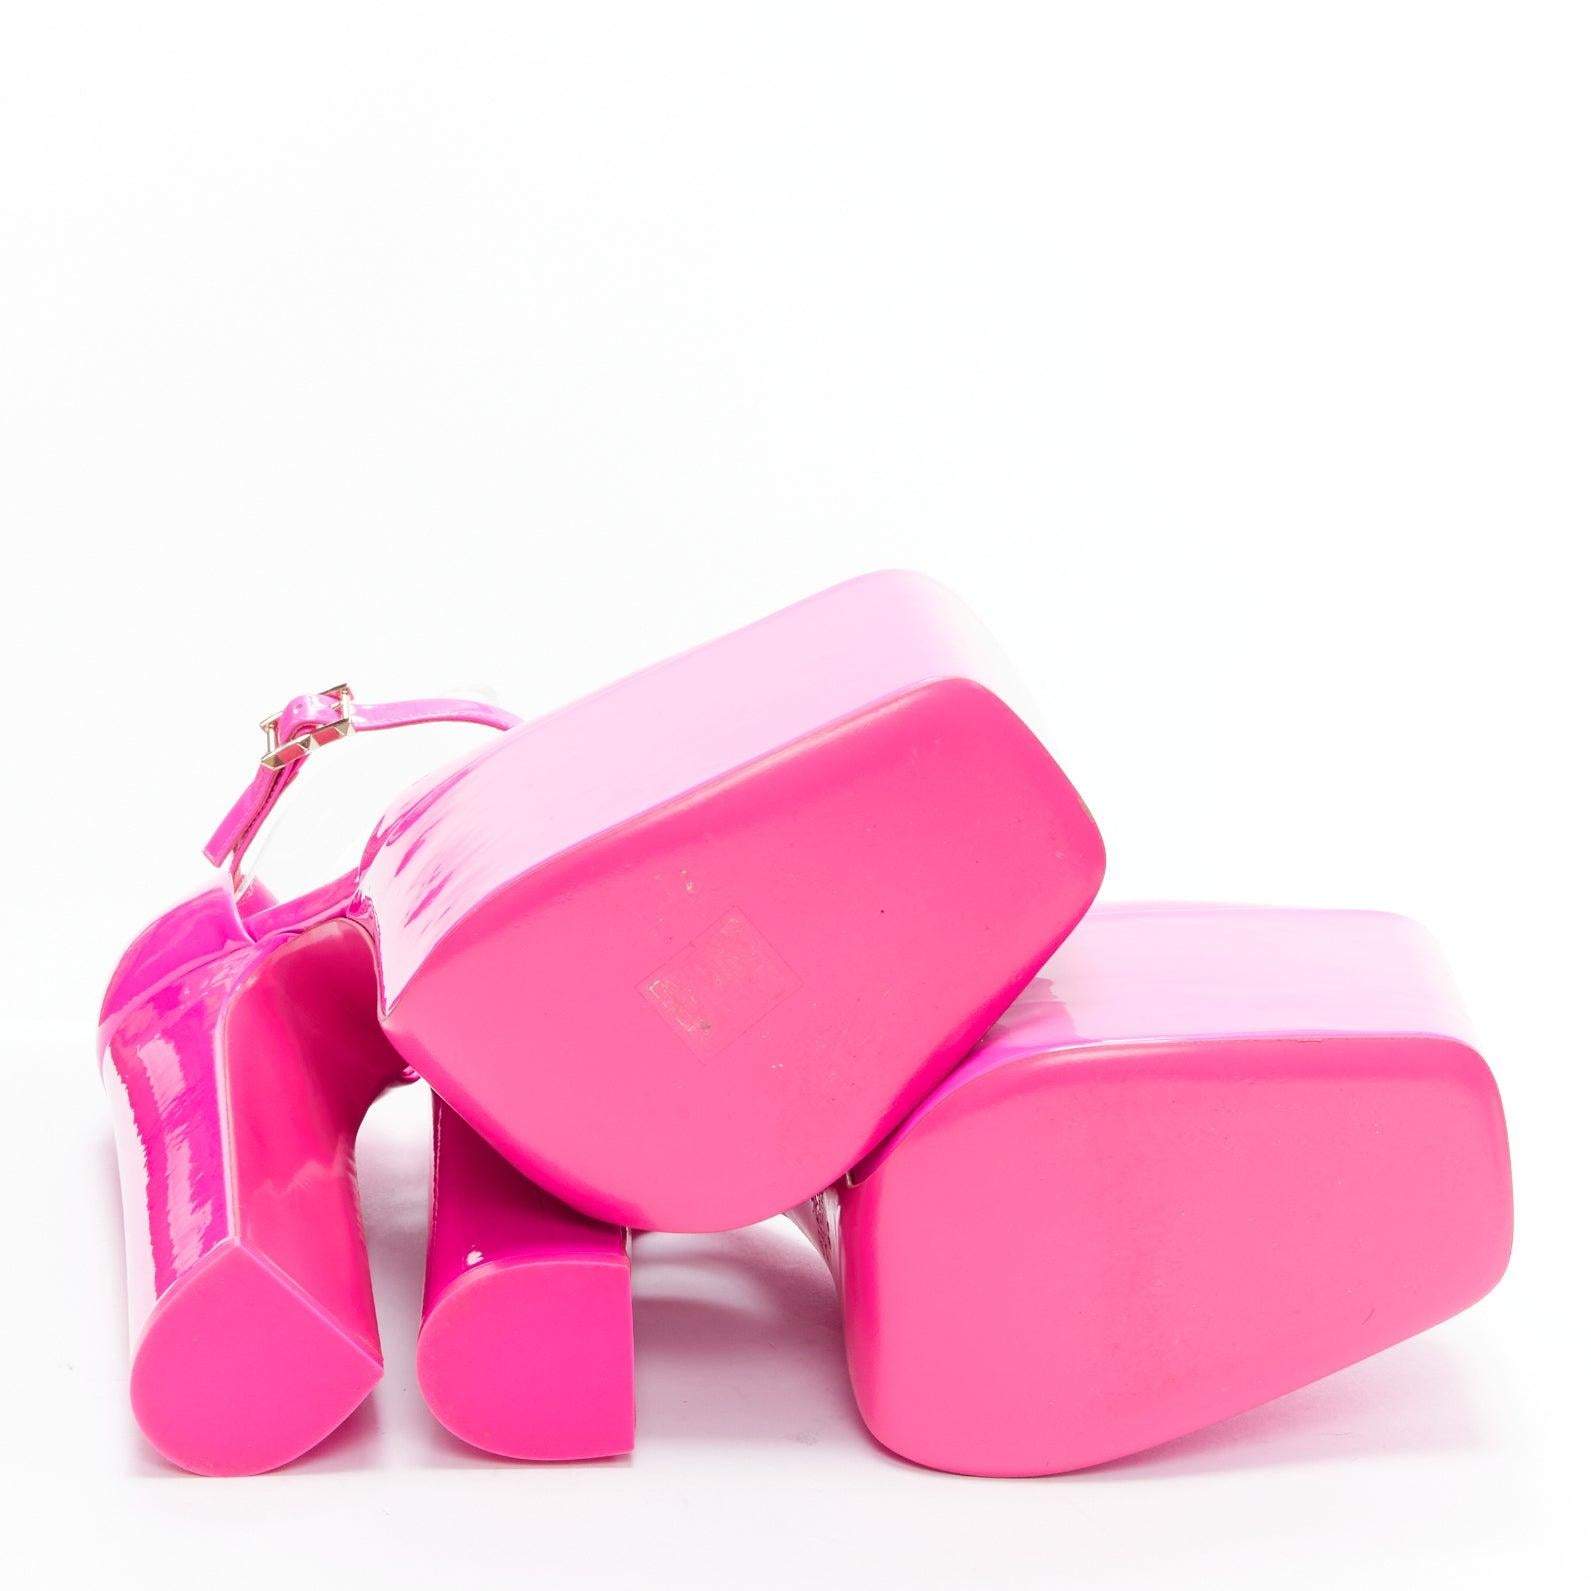 VALENTINO Runway Discobox 180 hot pink patent platform ankle strap heels EU39 For Sale 8